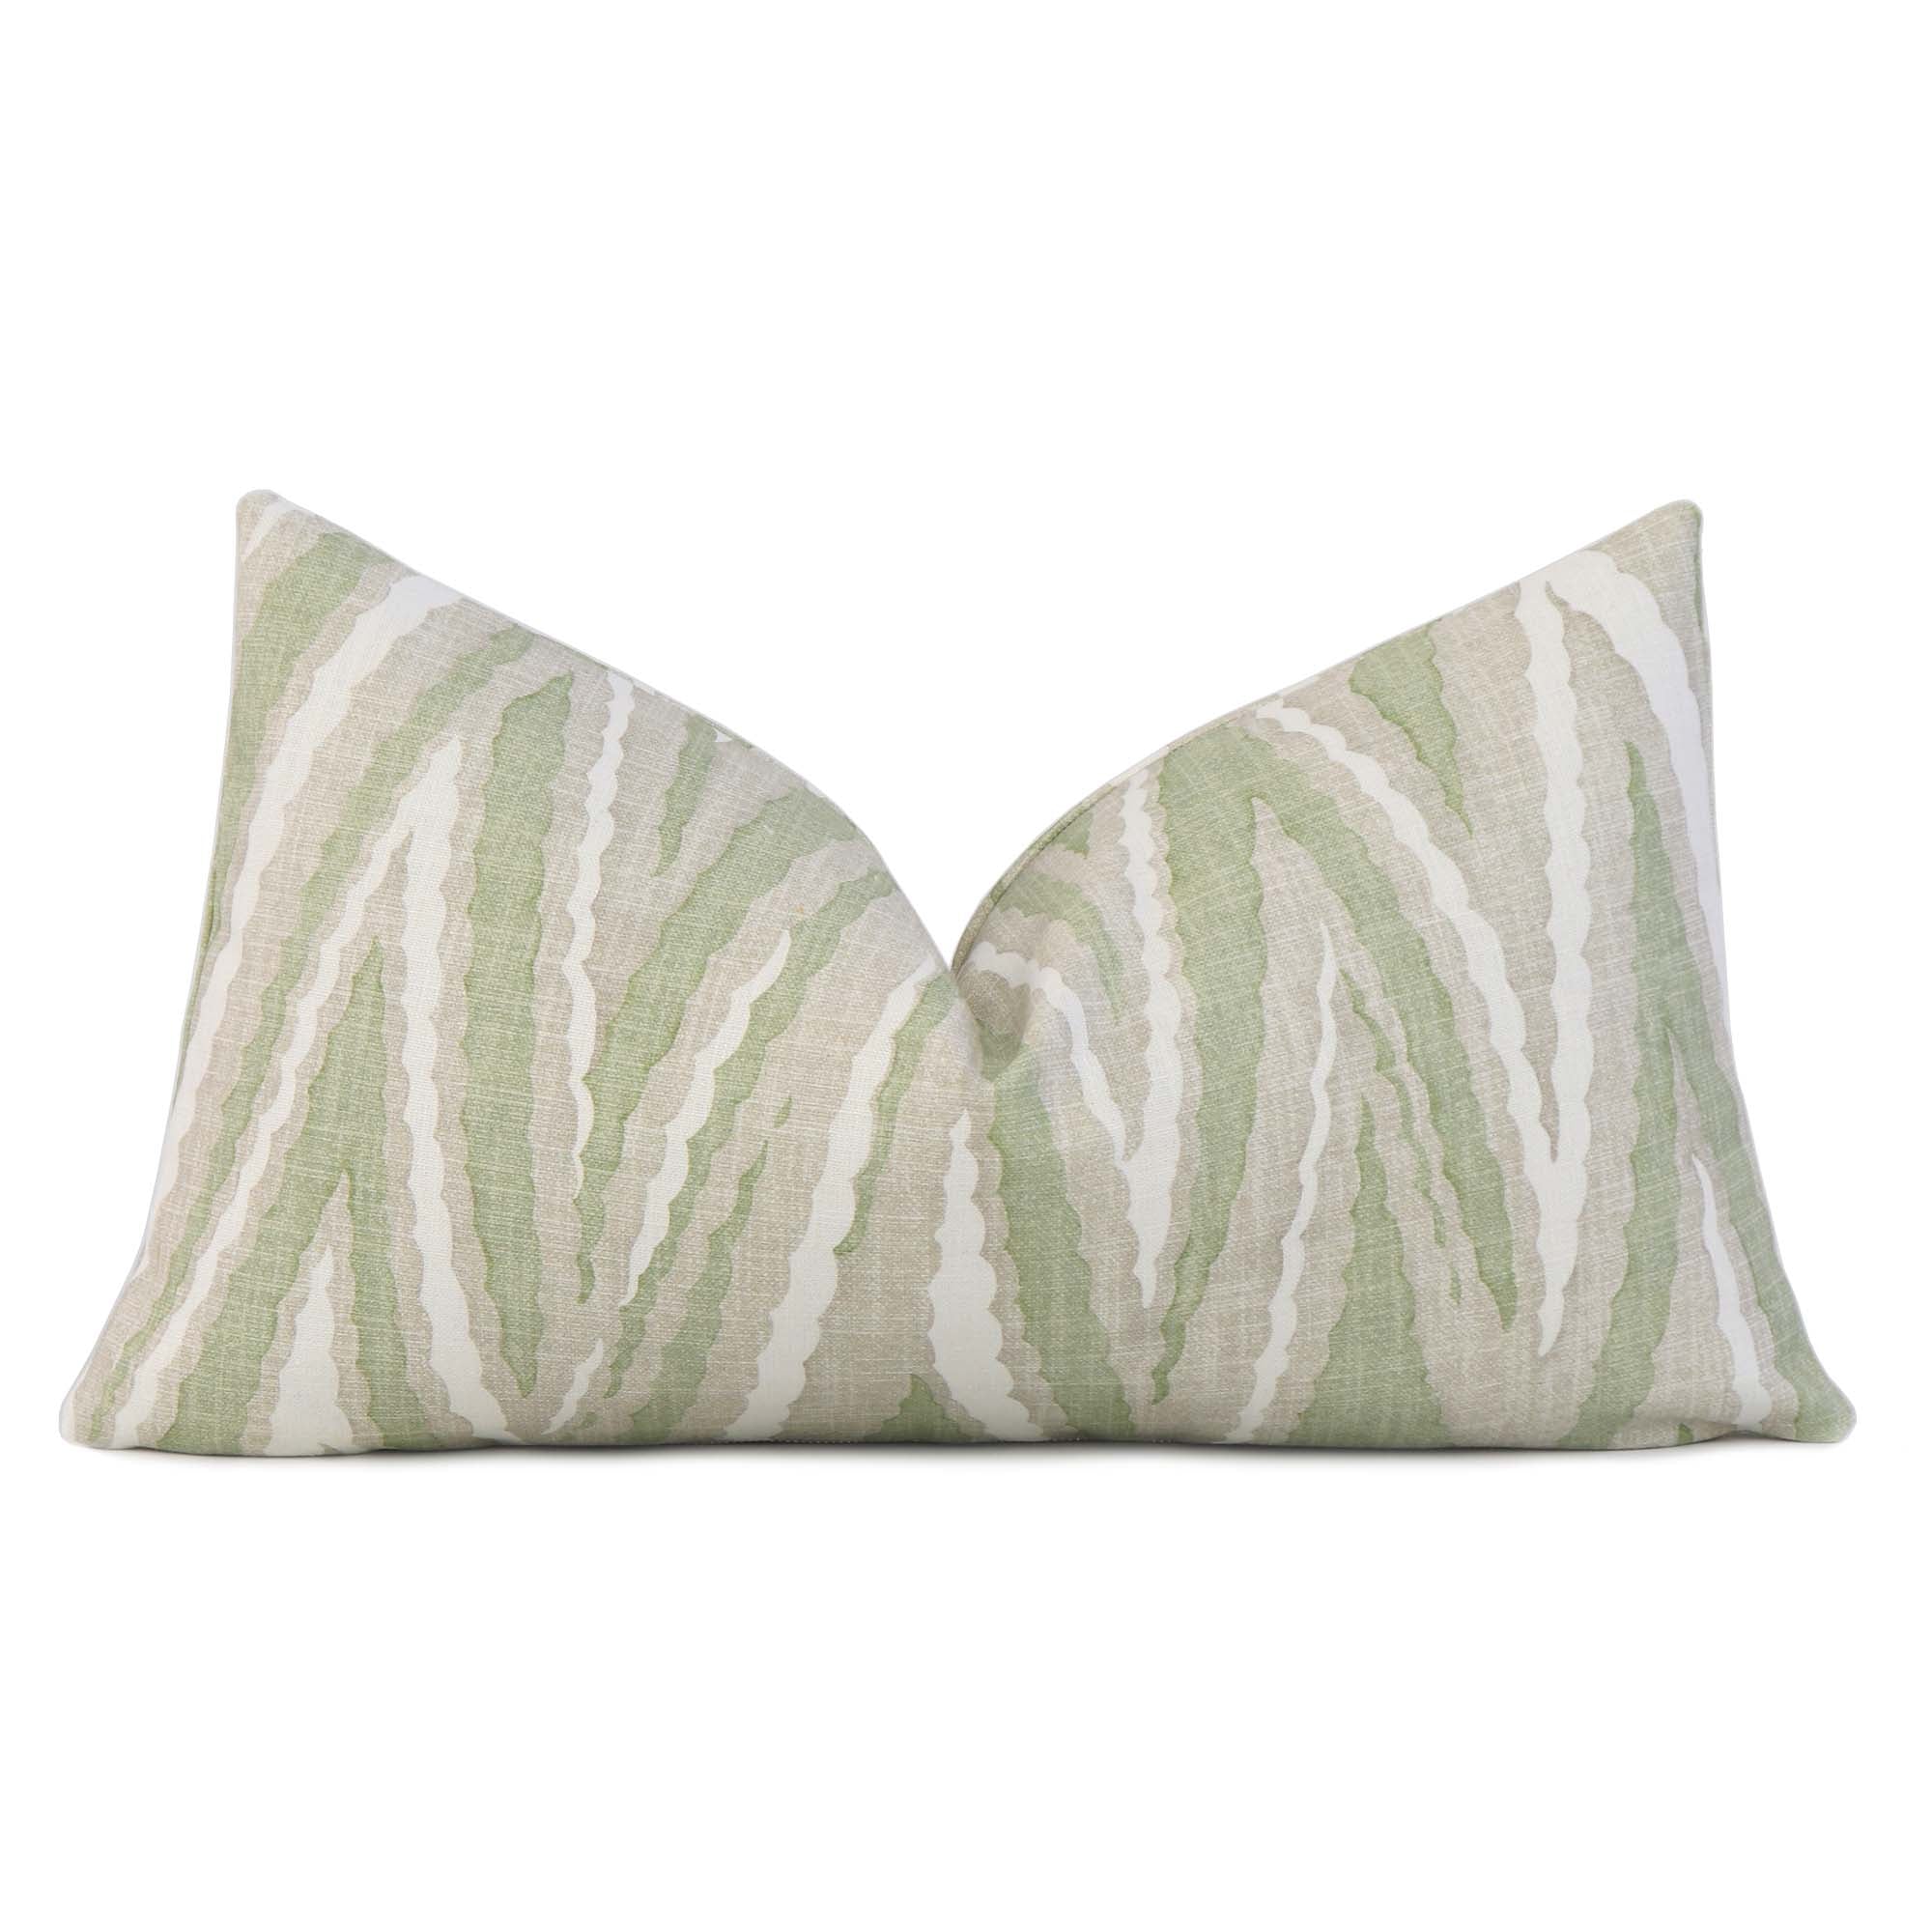 Thibaut Anna French Highland Peak Green Printed Chevron Linen Decorative Lumbar Throw Pillow Cover